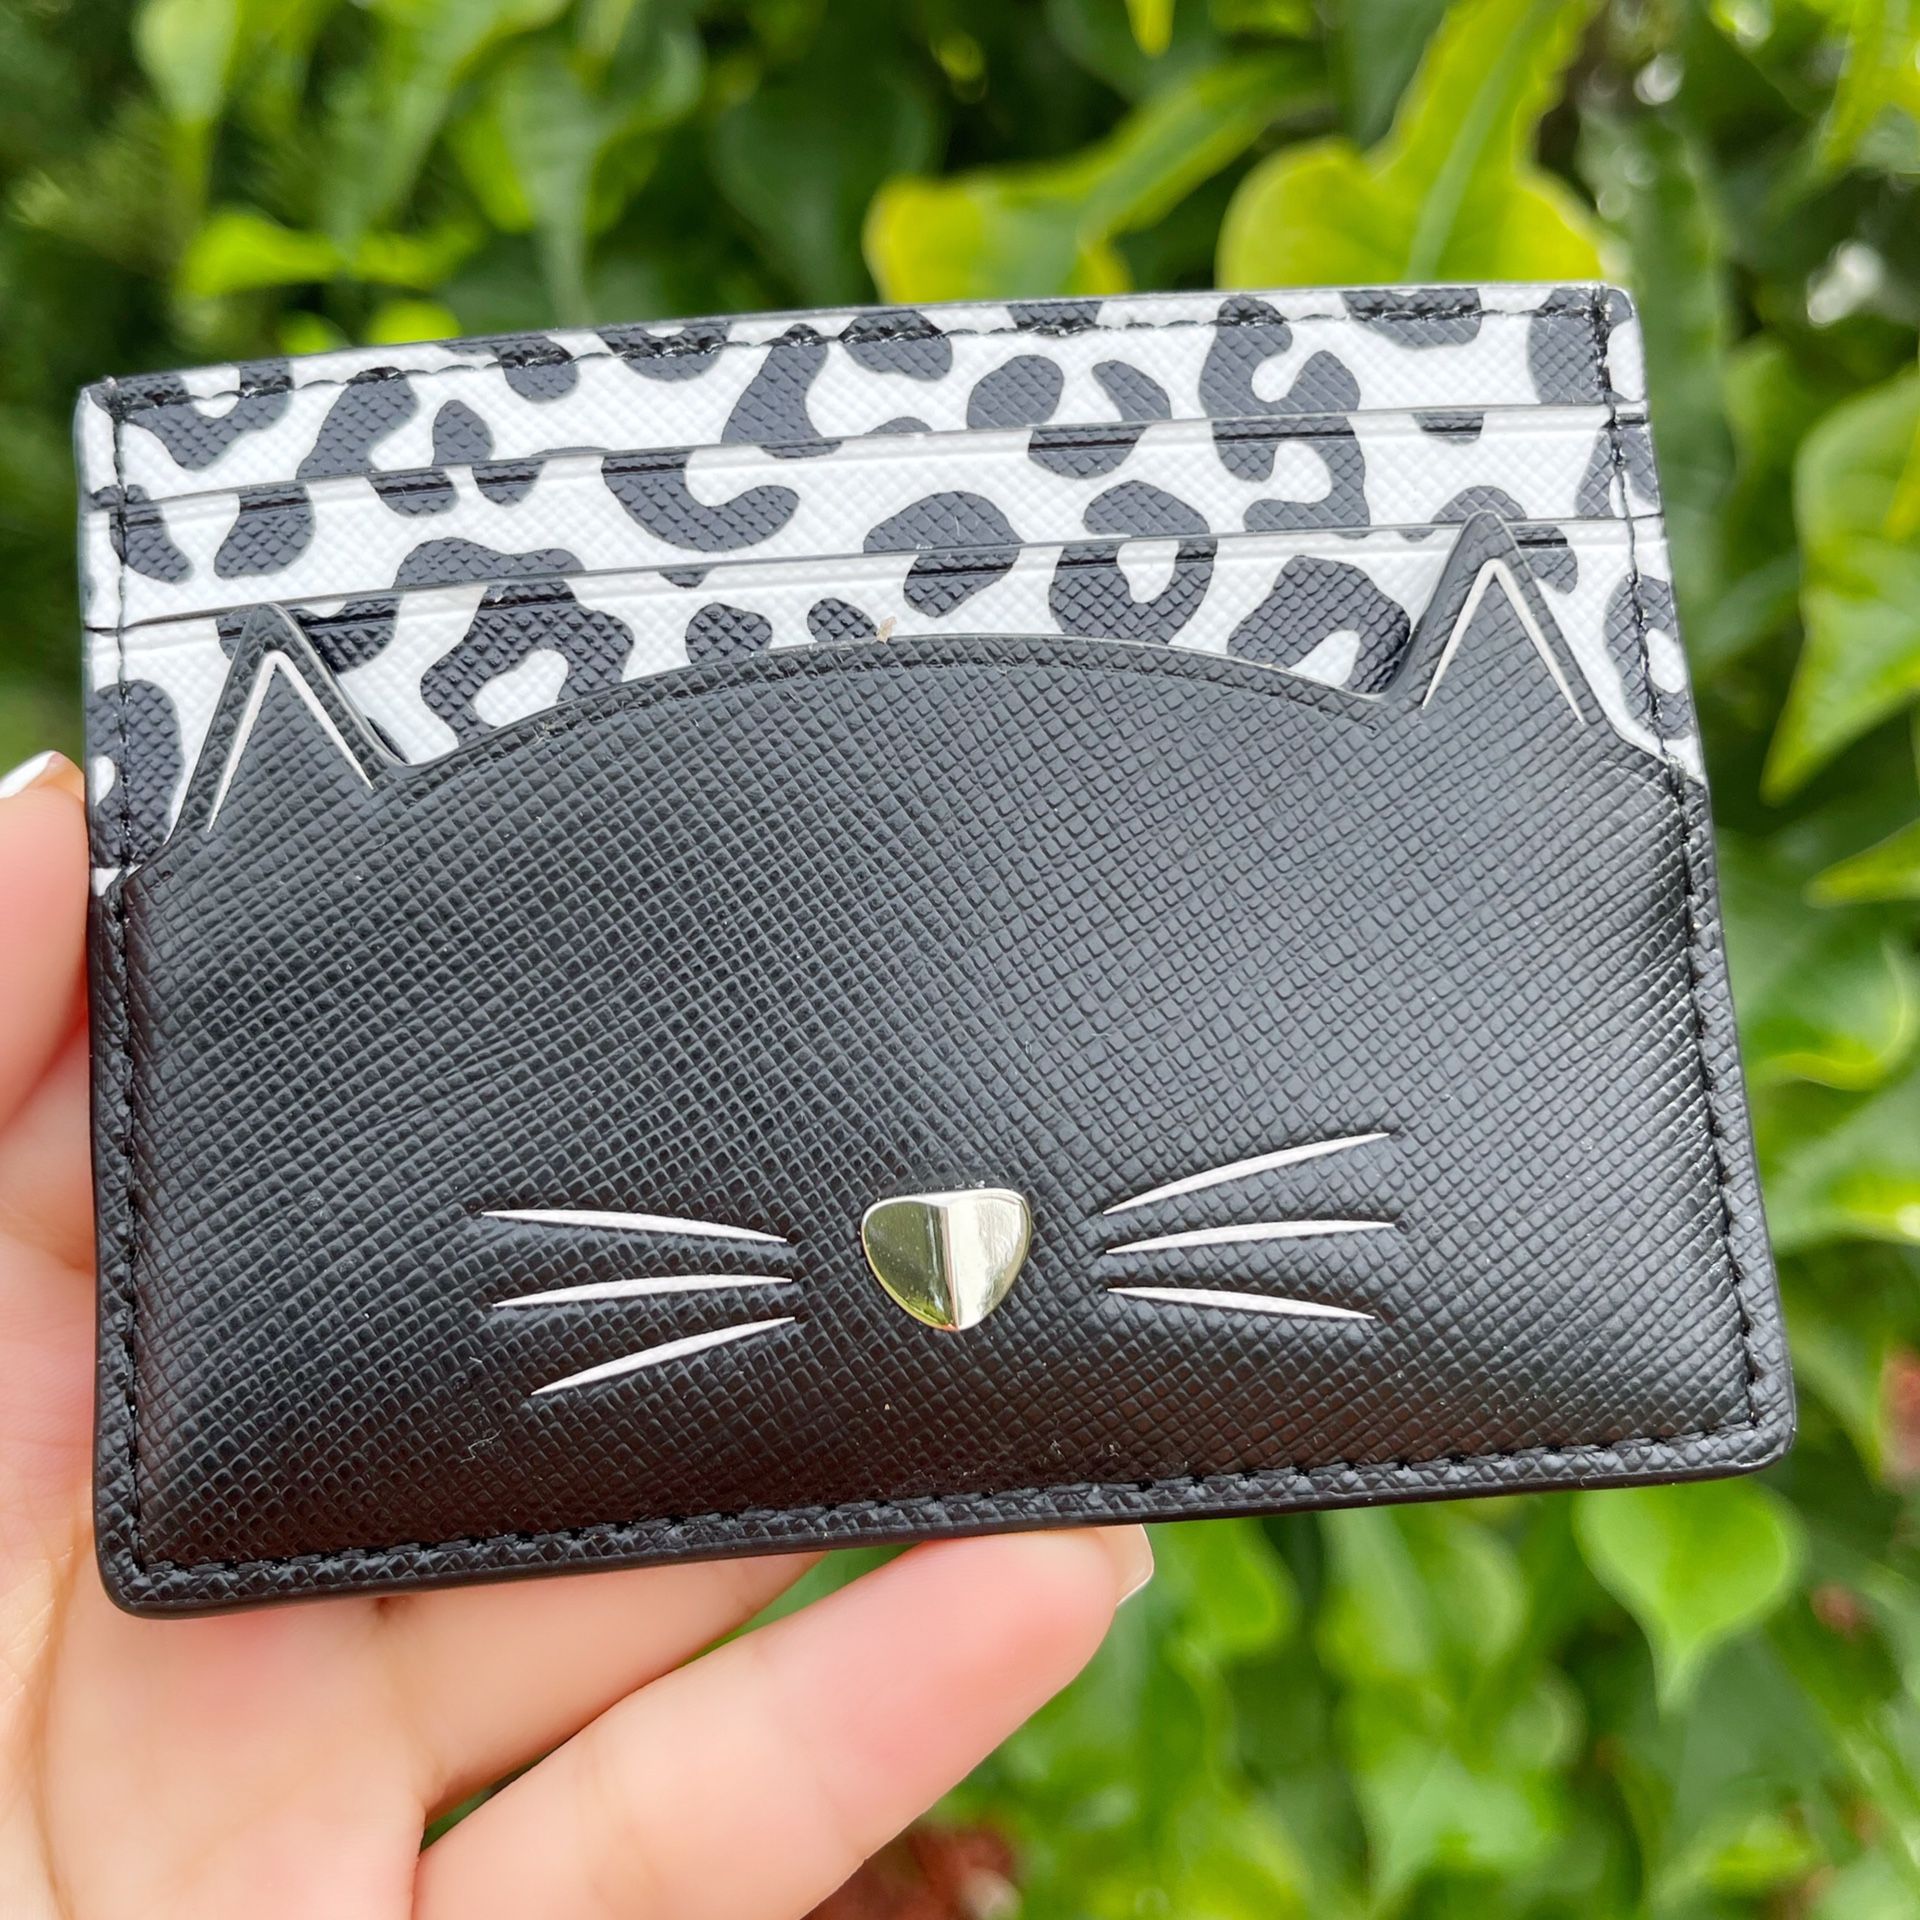 Kate Spade Meow Cat Small Slim Cardholder Black White Leopard Animal Print